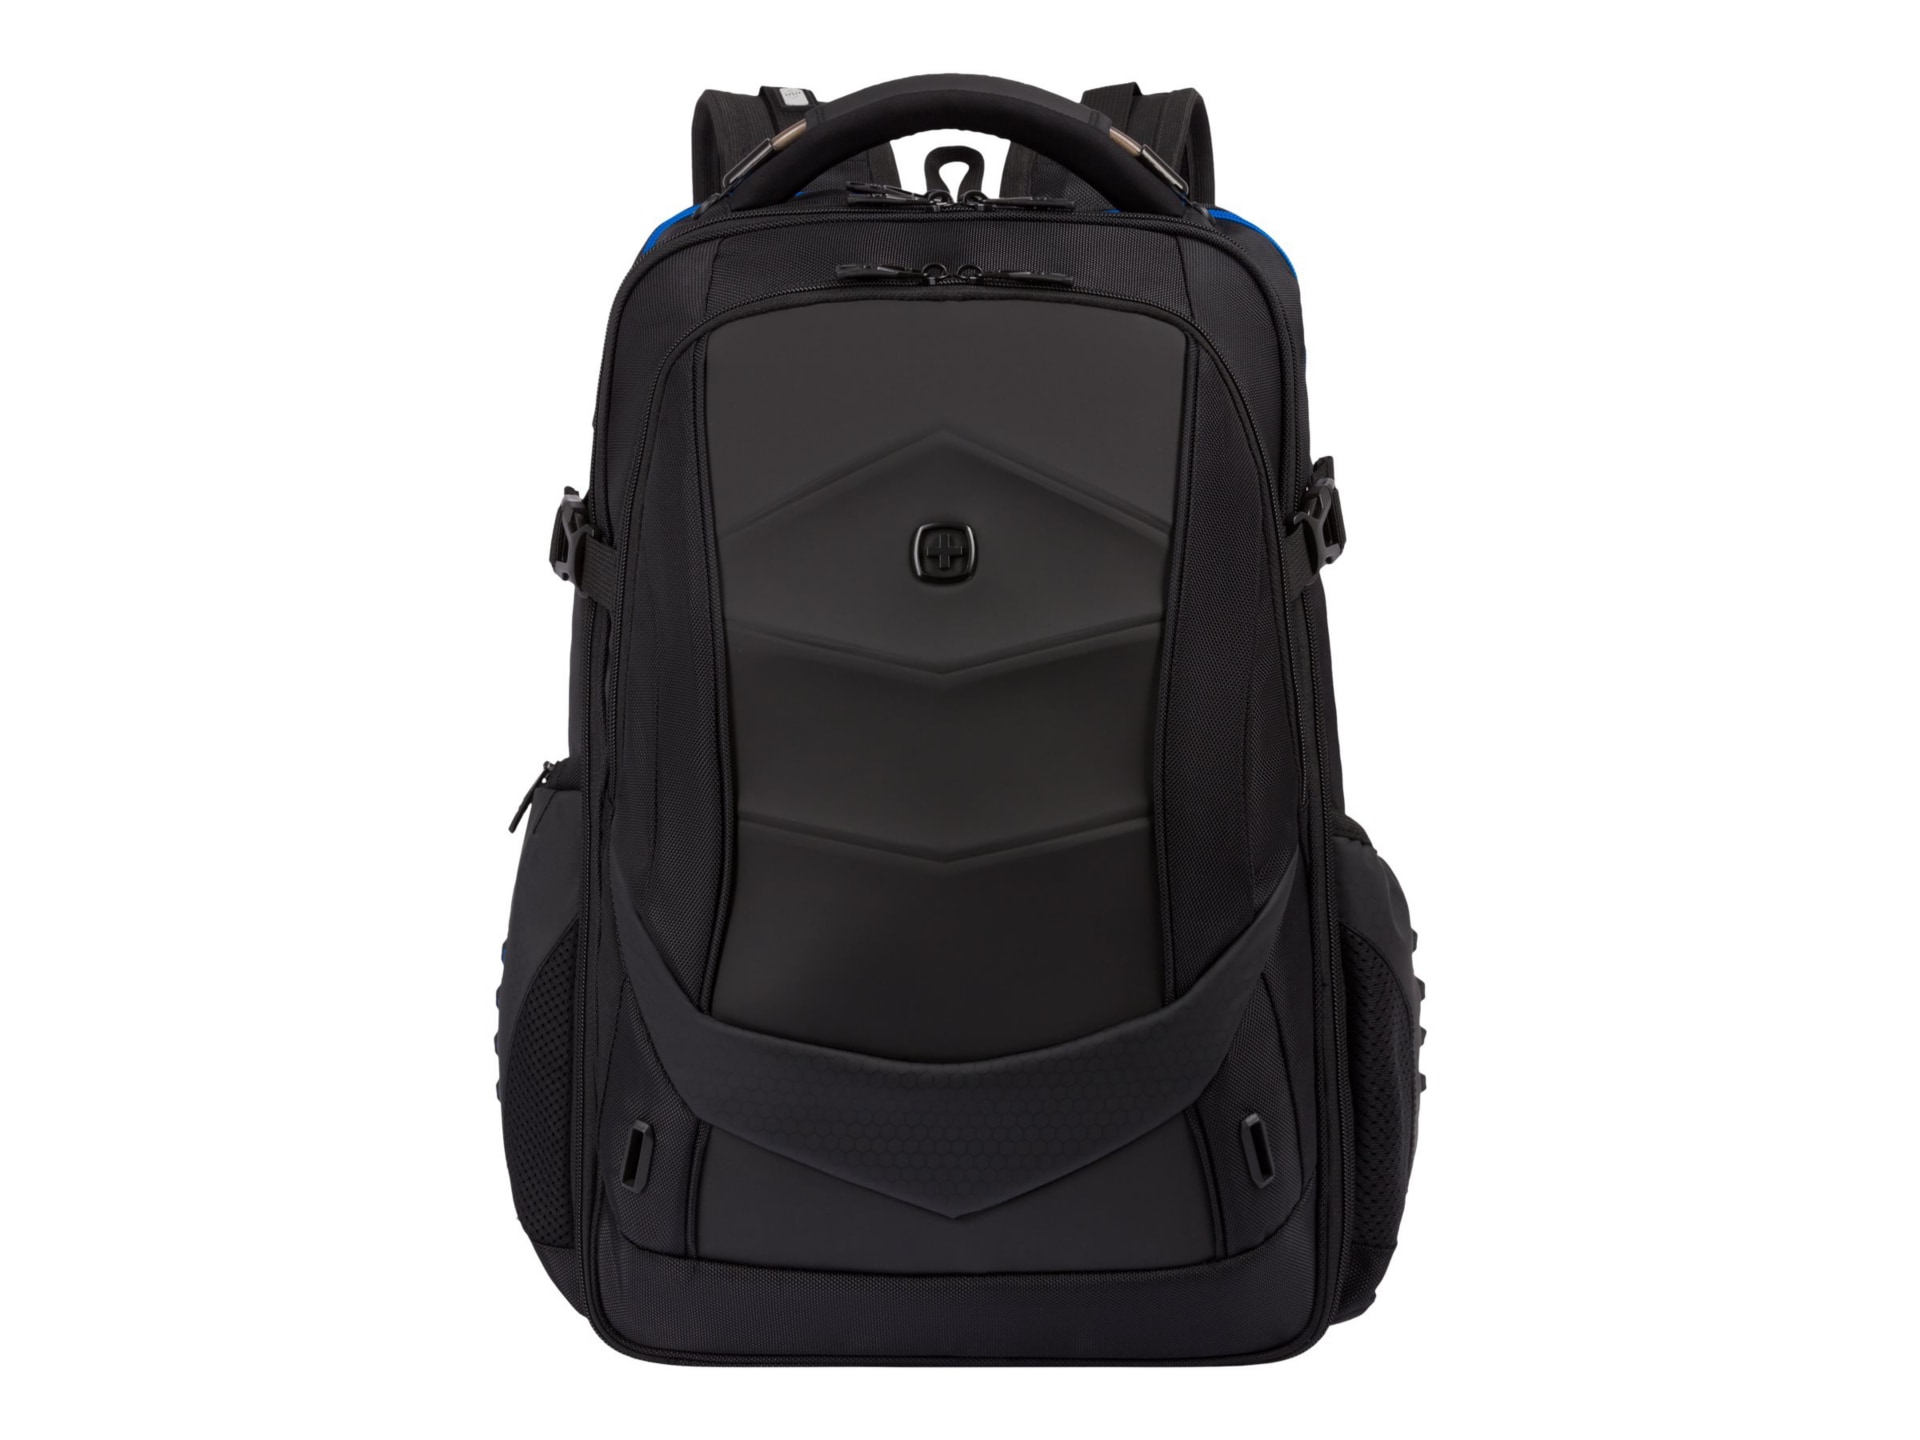 Swissgear 8120 USB Gaming Laptop Backpack - Black